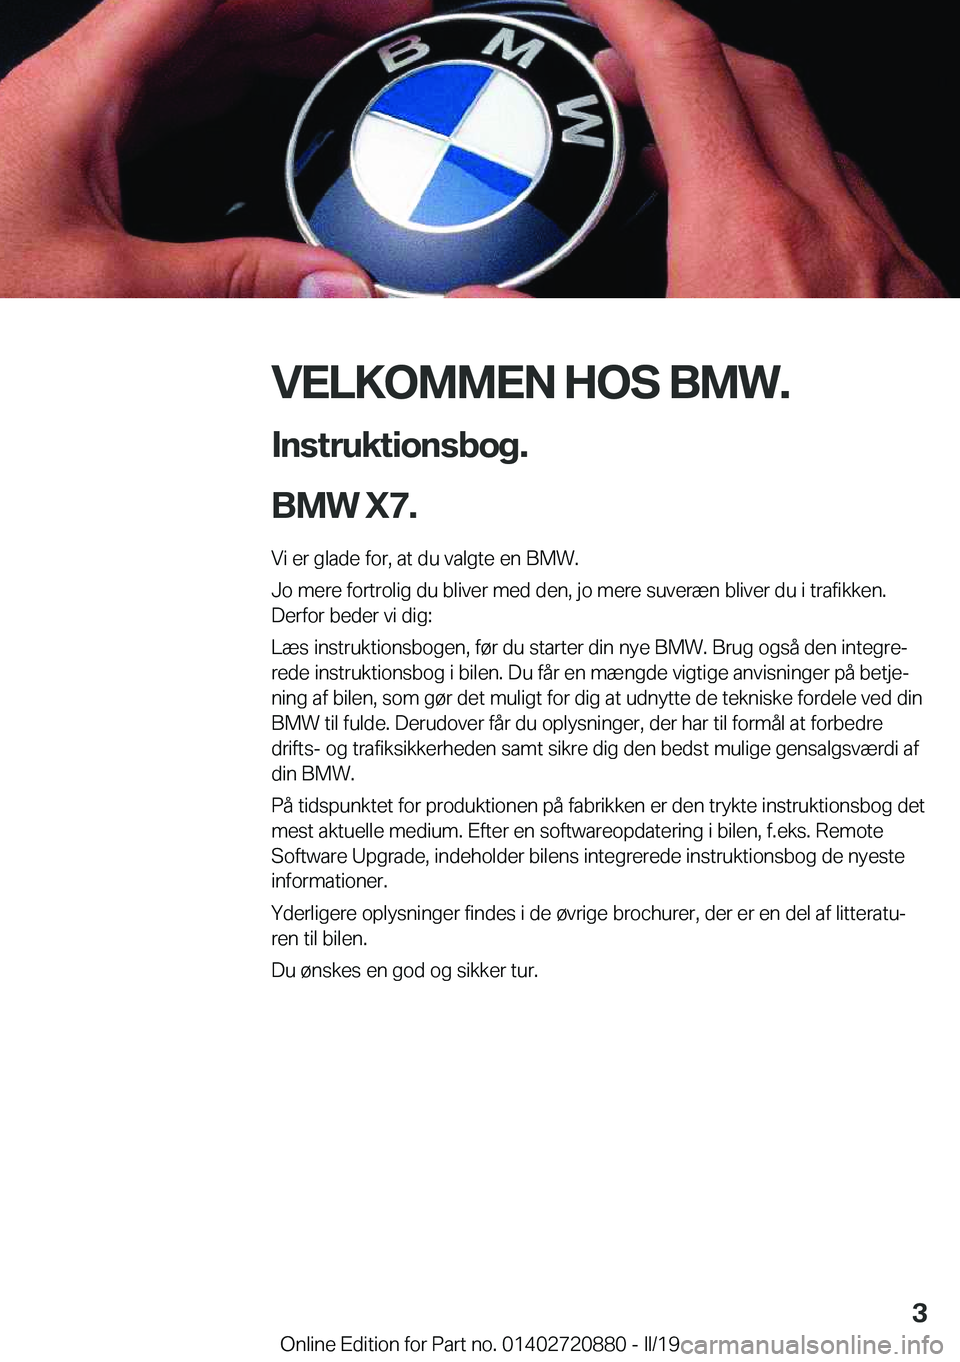 BMW X7 2019  InstruktionsbØger (in Danish) �V�E�L�K�O�M�M�E�N��H�O�S��B�M�W�.
�I�n�s�t�r�u�k�t�i�o�n�s�b�o�g�.
�B�M�W��X�7�. �V�i��e�r��g�l�a�d�e��f�o�r�,��a�t��d�u��v�a�l�g�t�e��e�n��B�M�W�.
�J�o��m�e�r�e��f�o�r�t�r�o�l�i�g��d�u